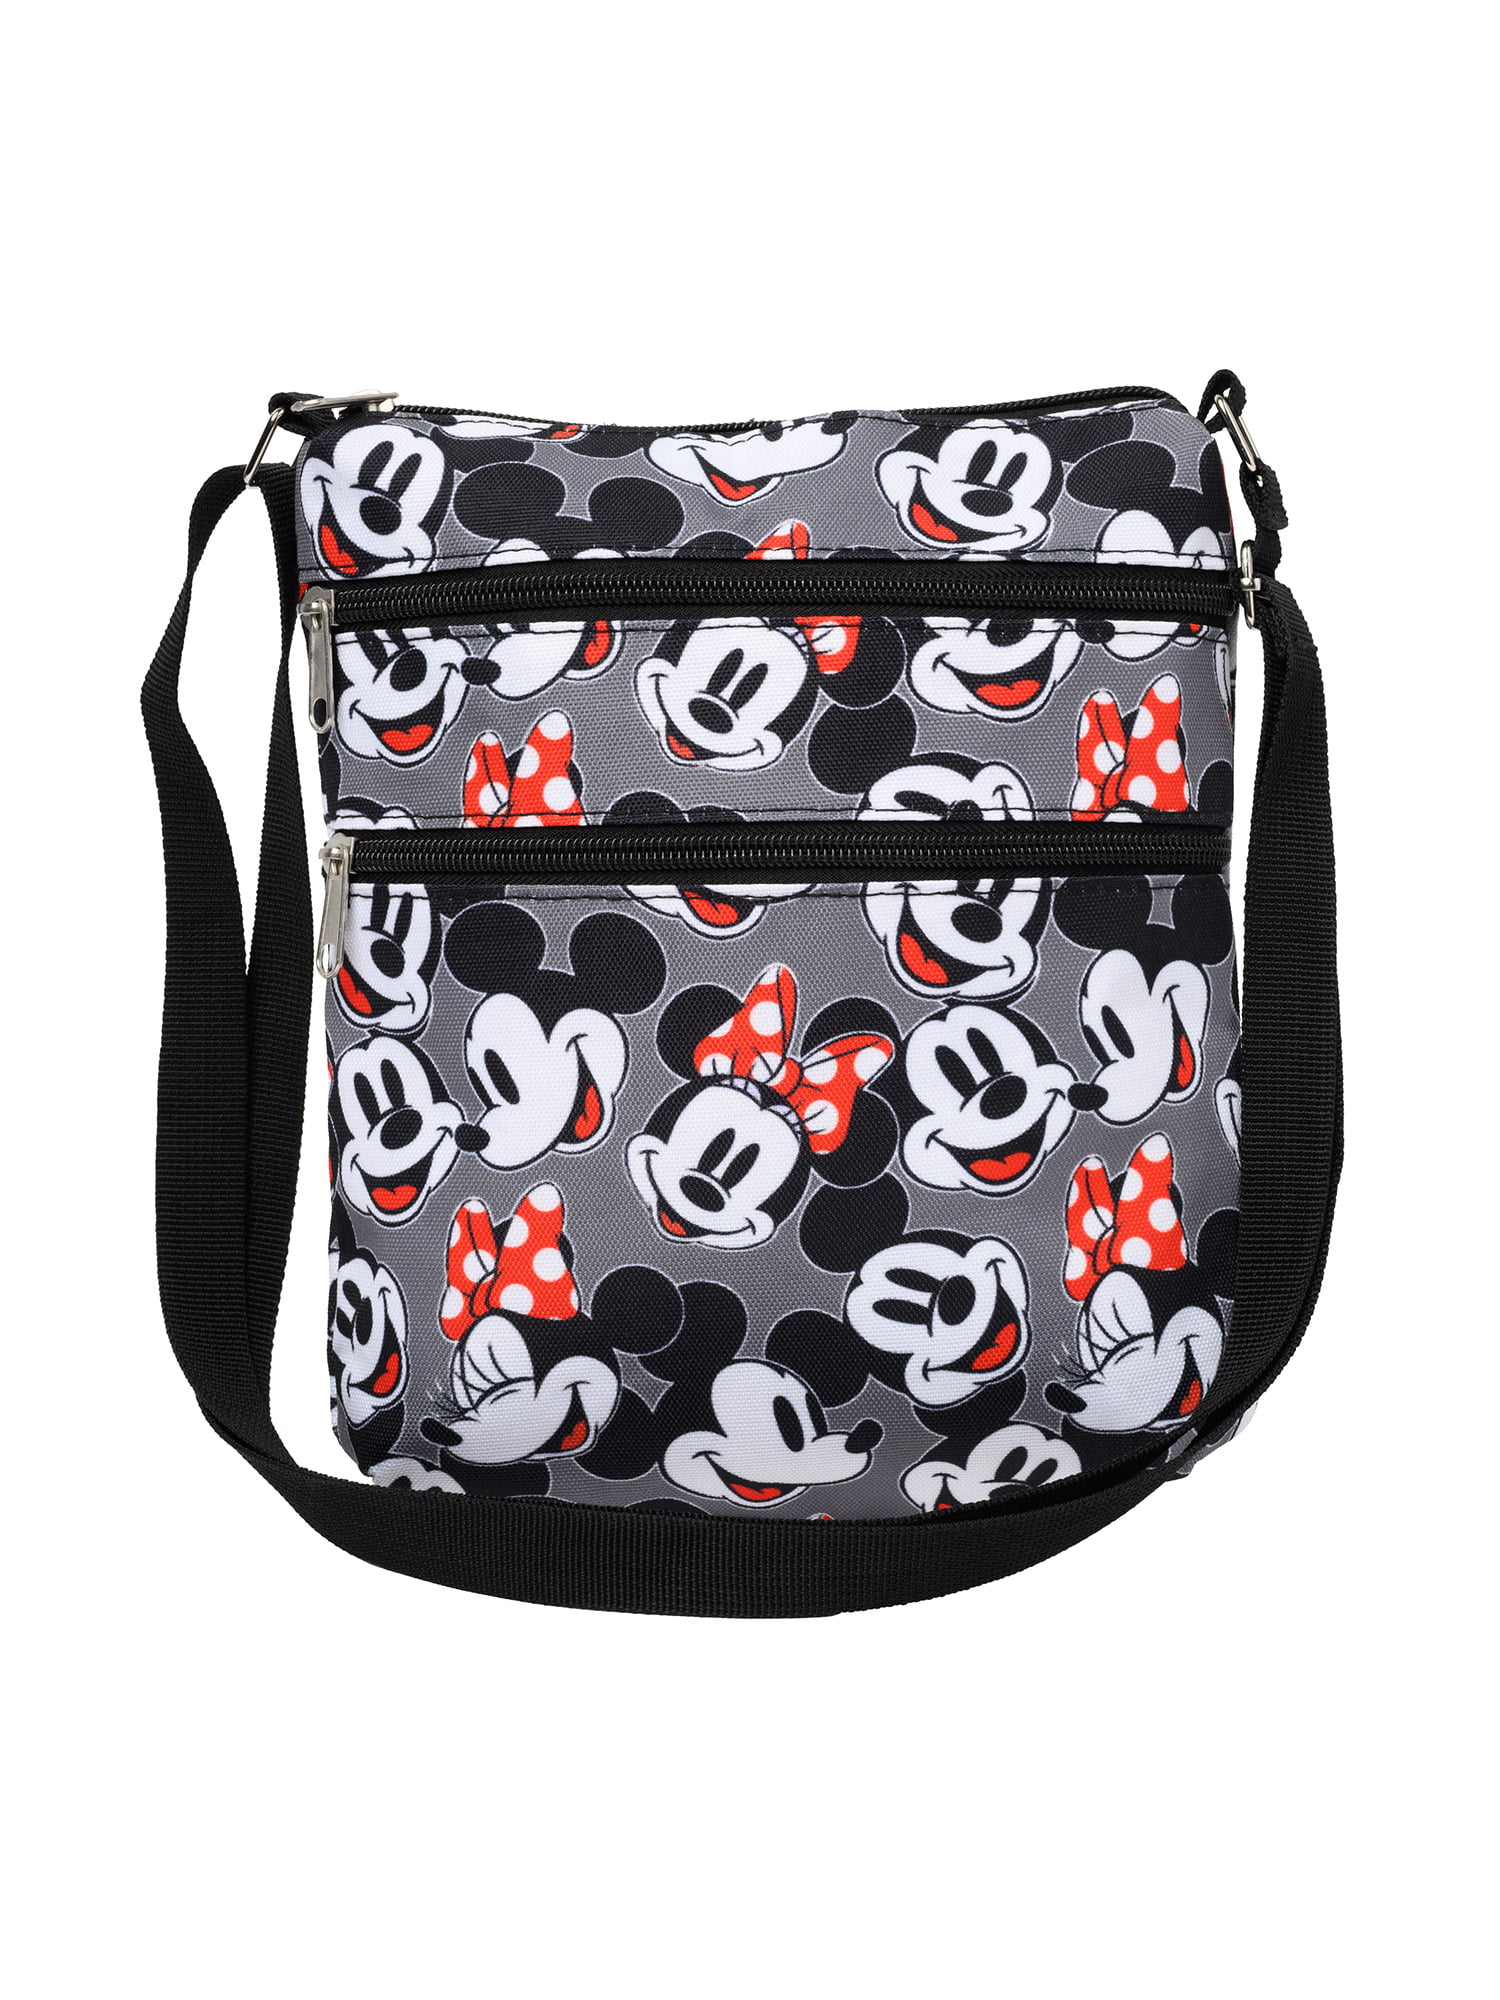 Disney Bag | Mickey Mouse Cross Body Bag | Cartoon Chest Bag | Funny Bag |  Bolsas, Acessórios louis vuitton, Bolsa da disney